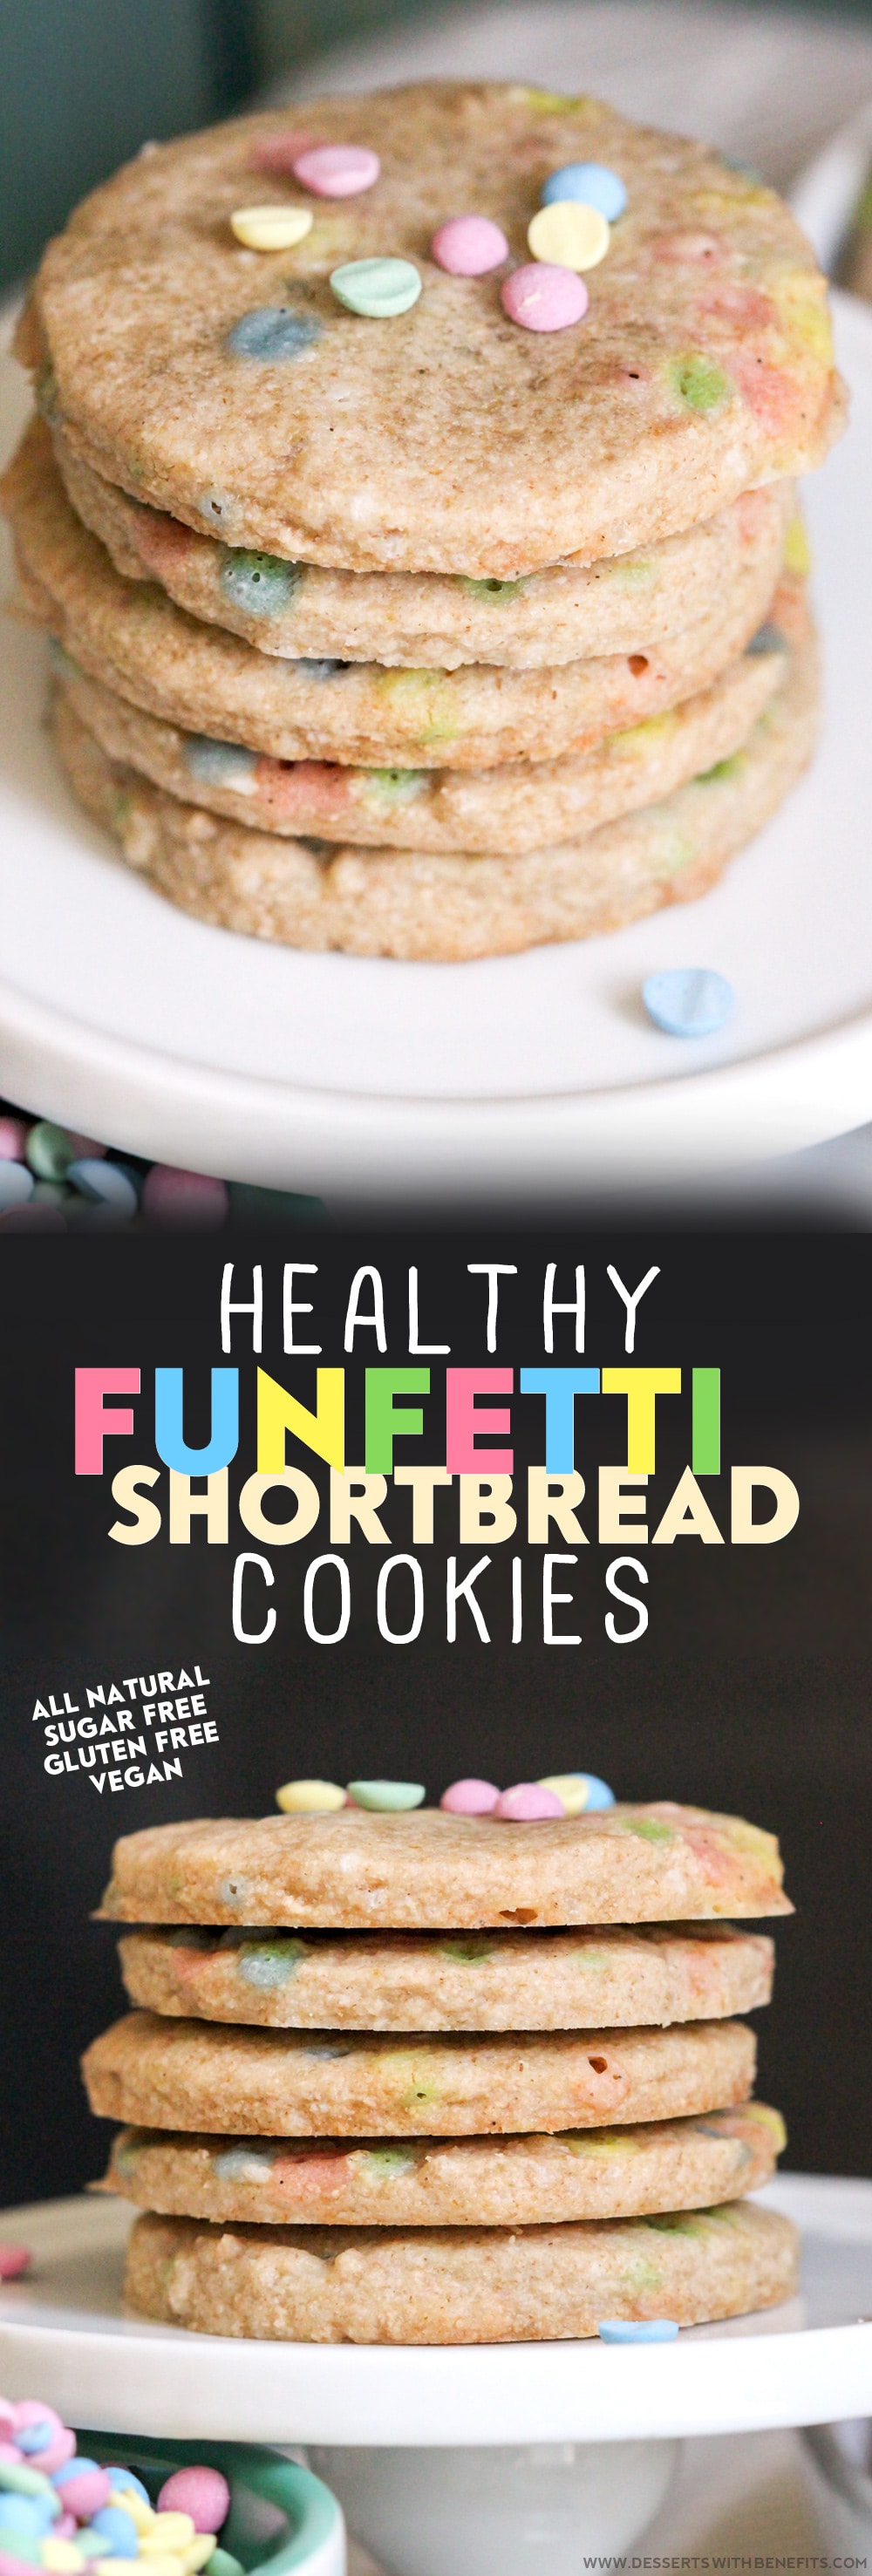 Healthy Funfetti Shortbread Cookies recipe (sugar free, gluten free, dairy free, vegan) - Healthy Dessert Recipes at Desserts with Benefits